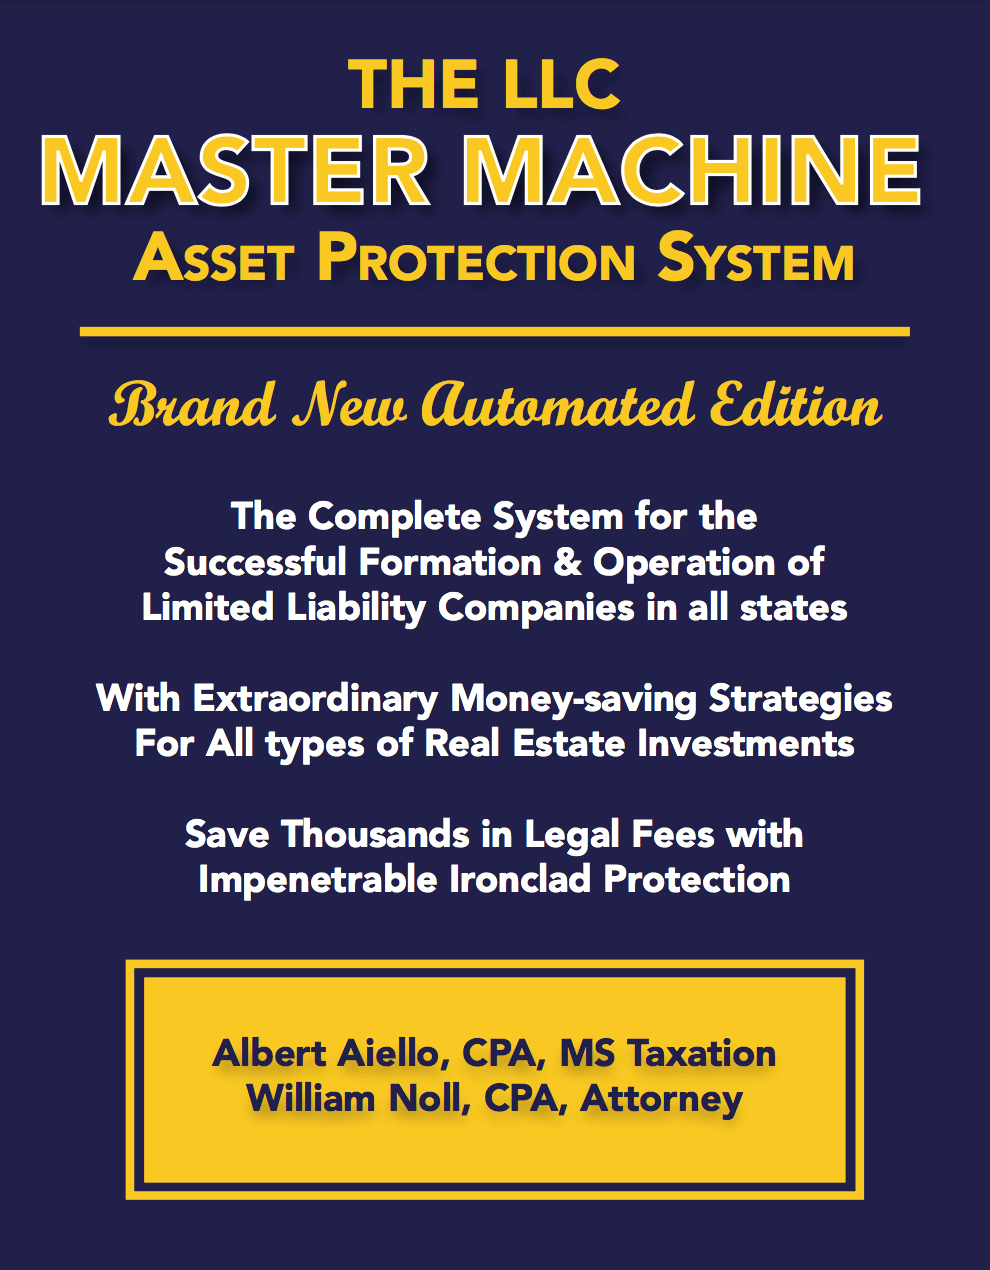 Al Aiello - LLC Master Machine Asset Protection System